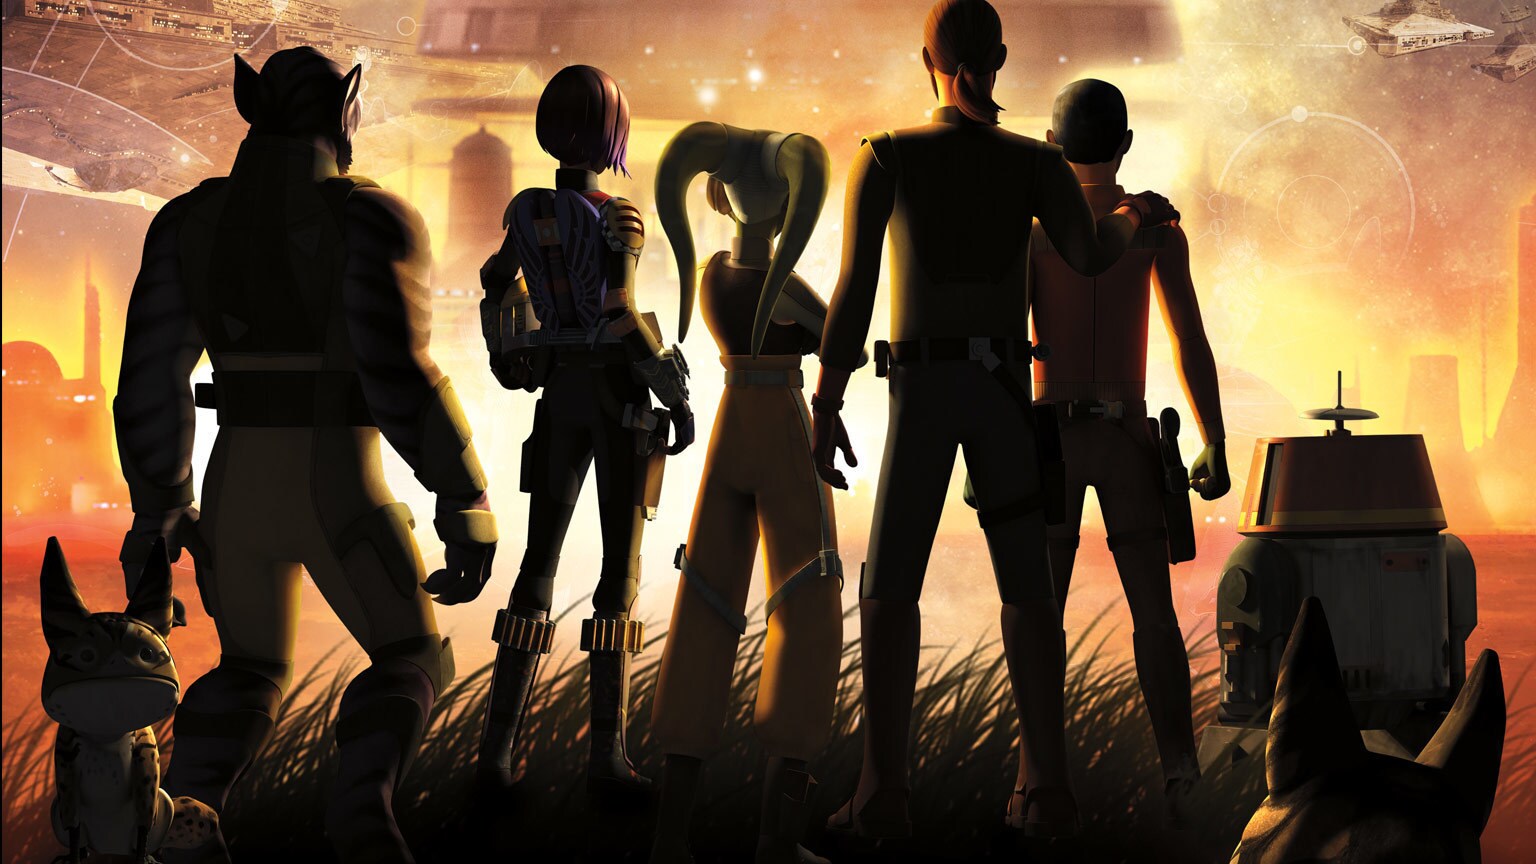 The Final Episodes of Star Wars Rebels Begin February 19 on Disney XD